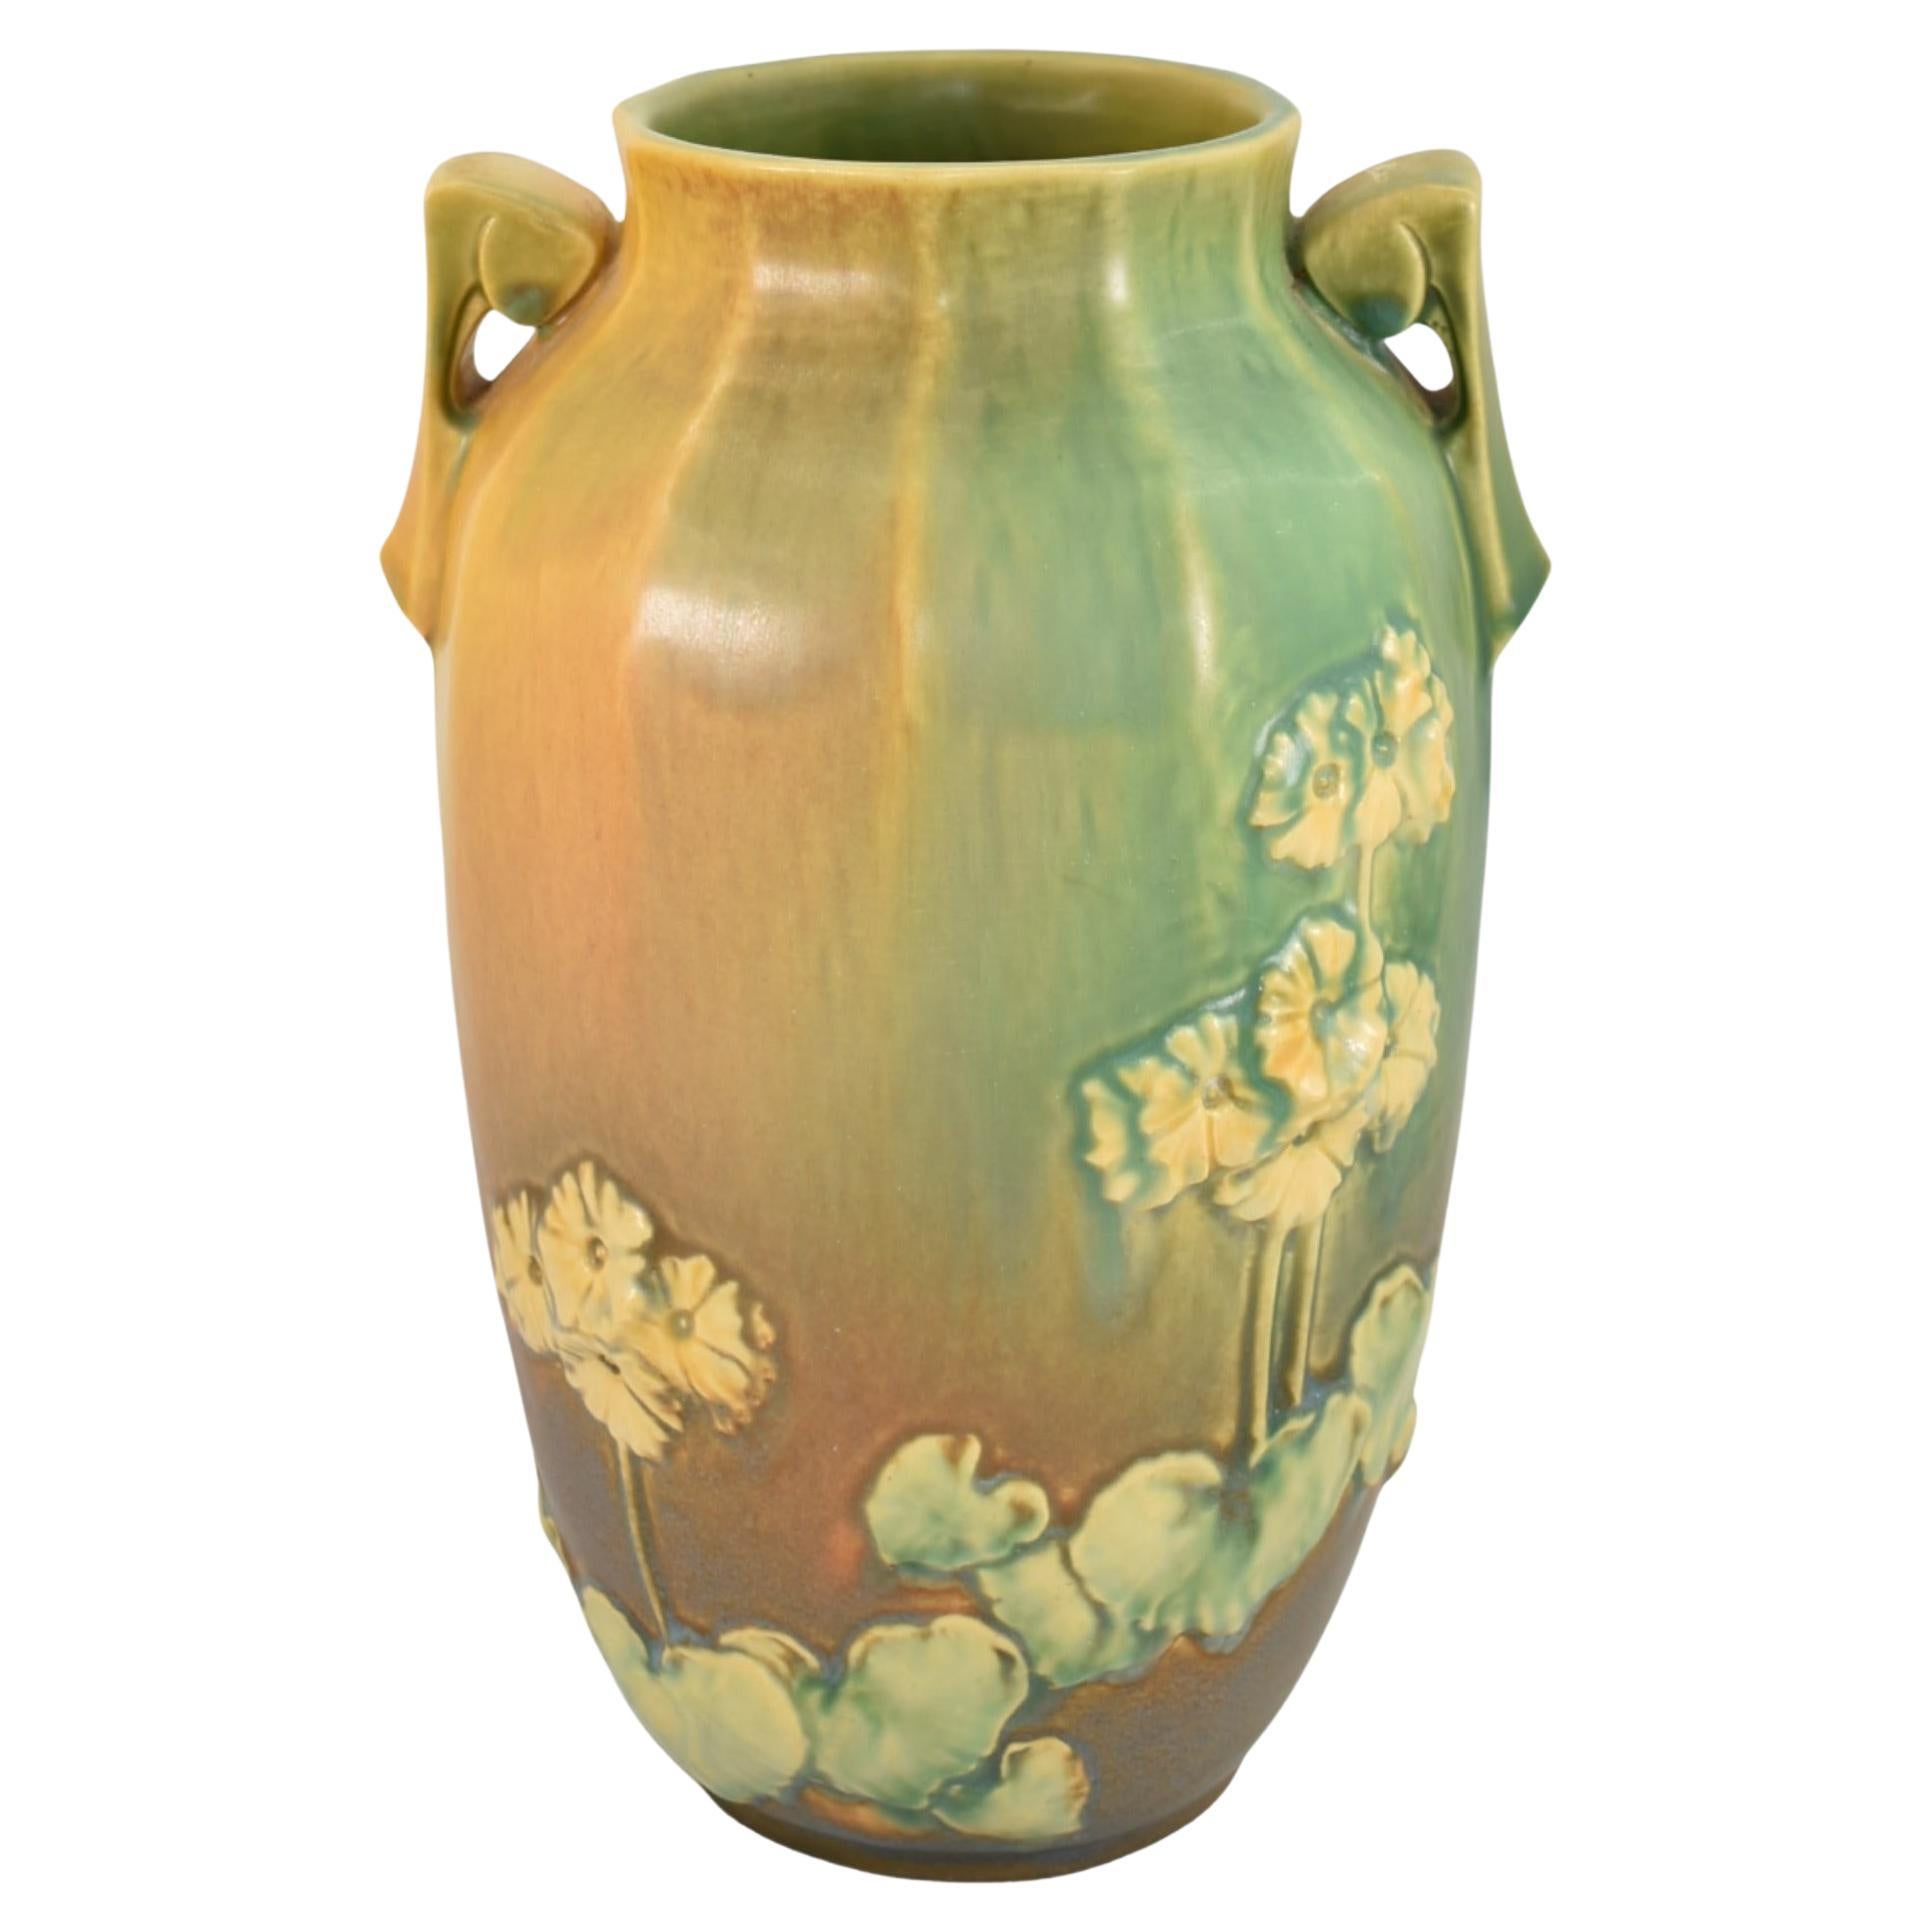 Roseville Primrose Experimentale Dreifachglasur-Vase aus Keramik 1936 Vintage-Keramik